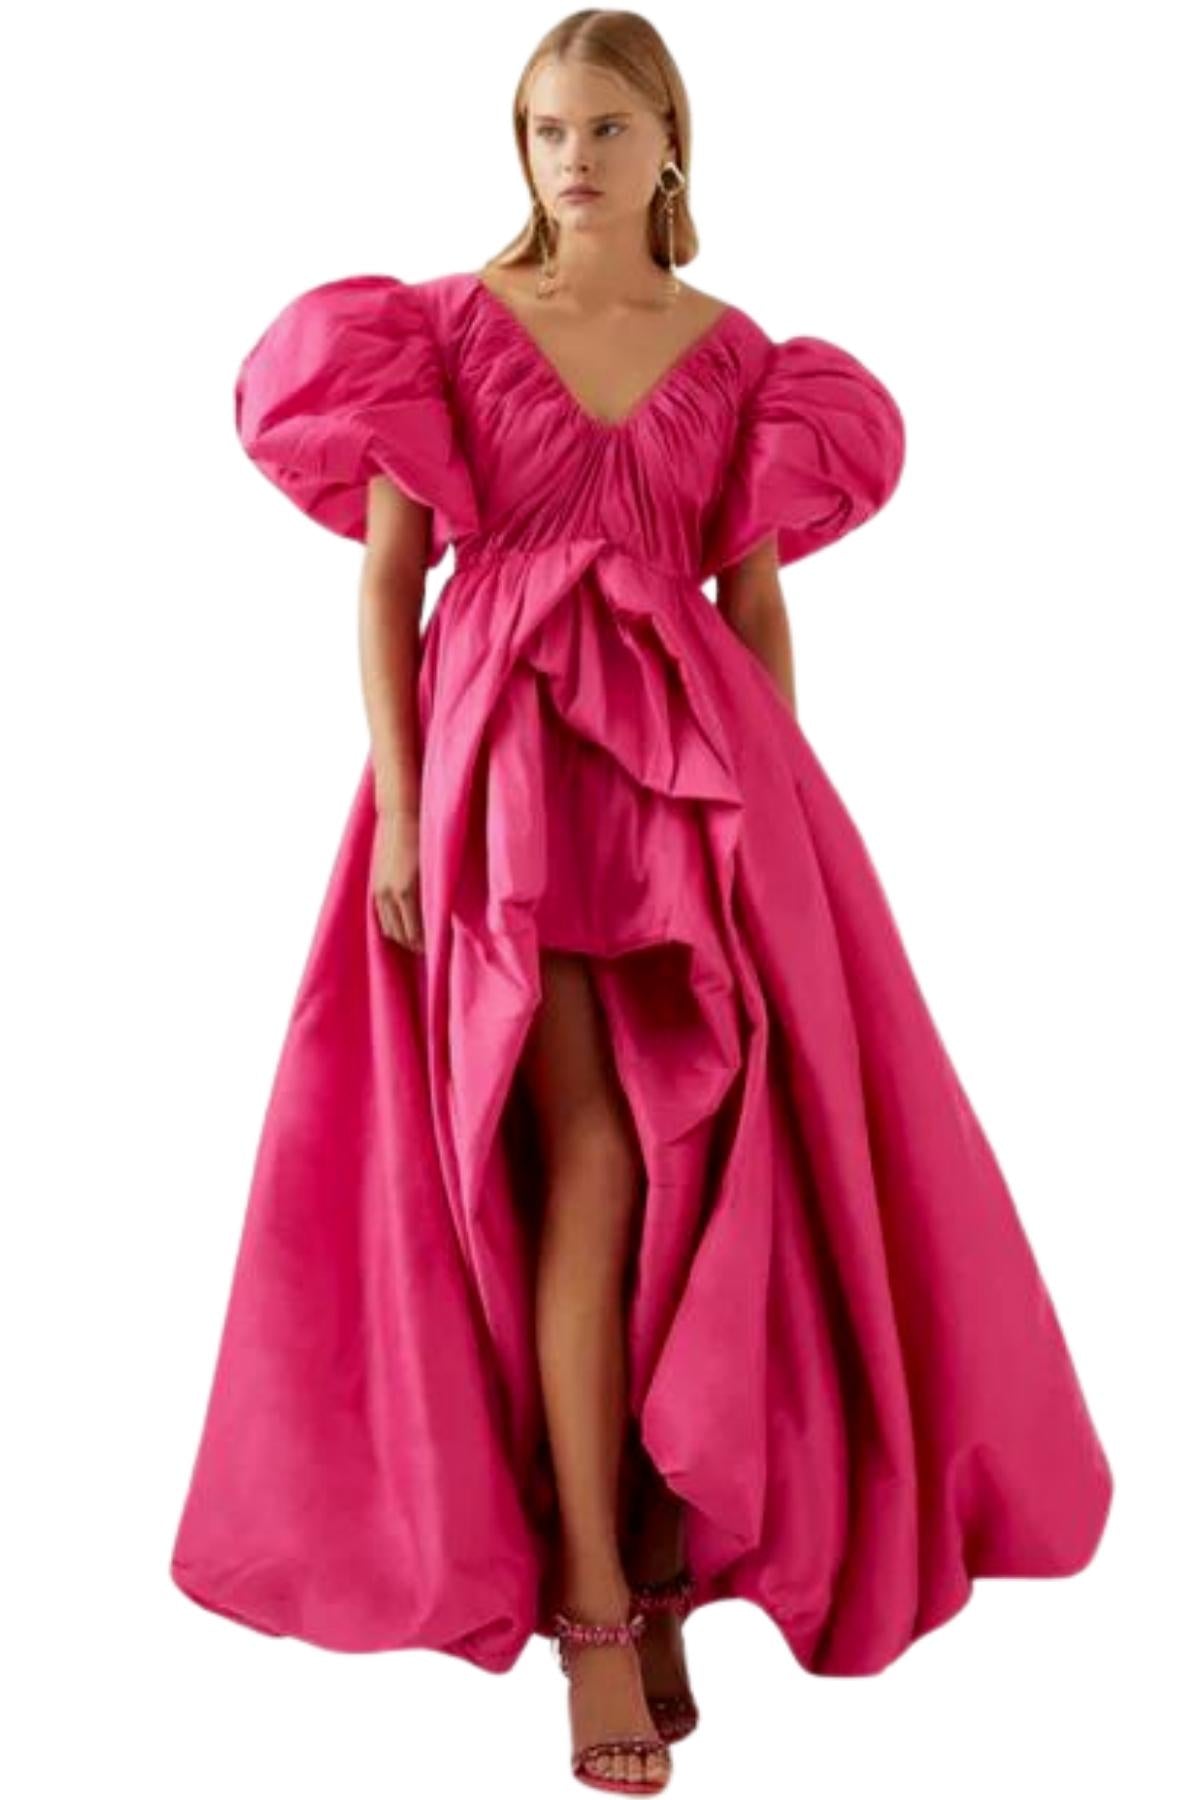 Aje AJE Manifestation Gown (Fuchsia Pink) - RRP $899 - AjemanifestationGown.jpg